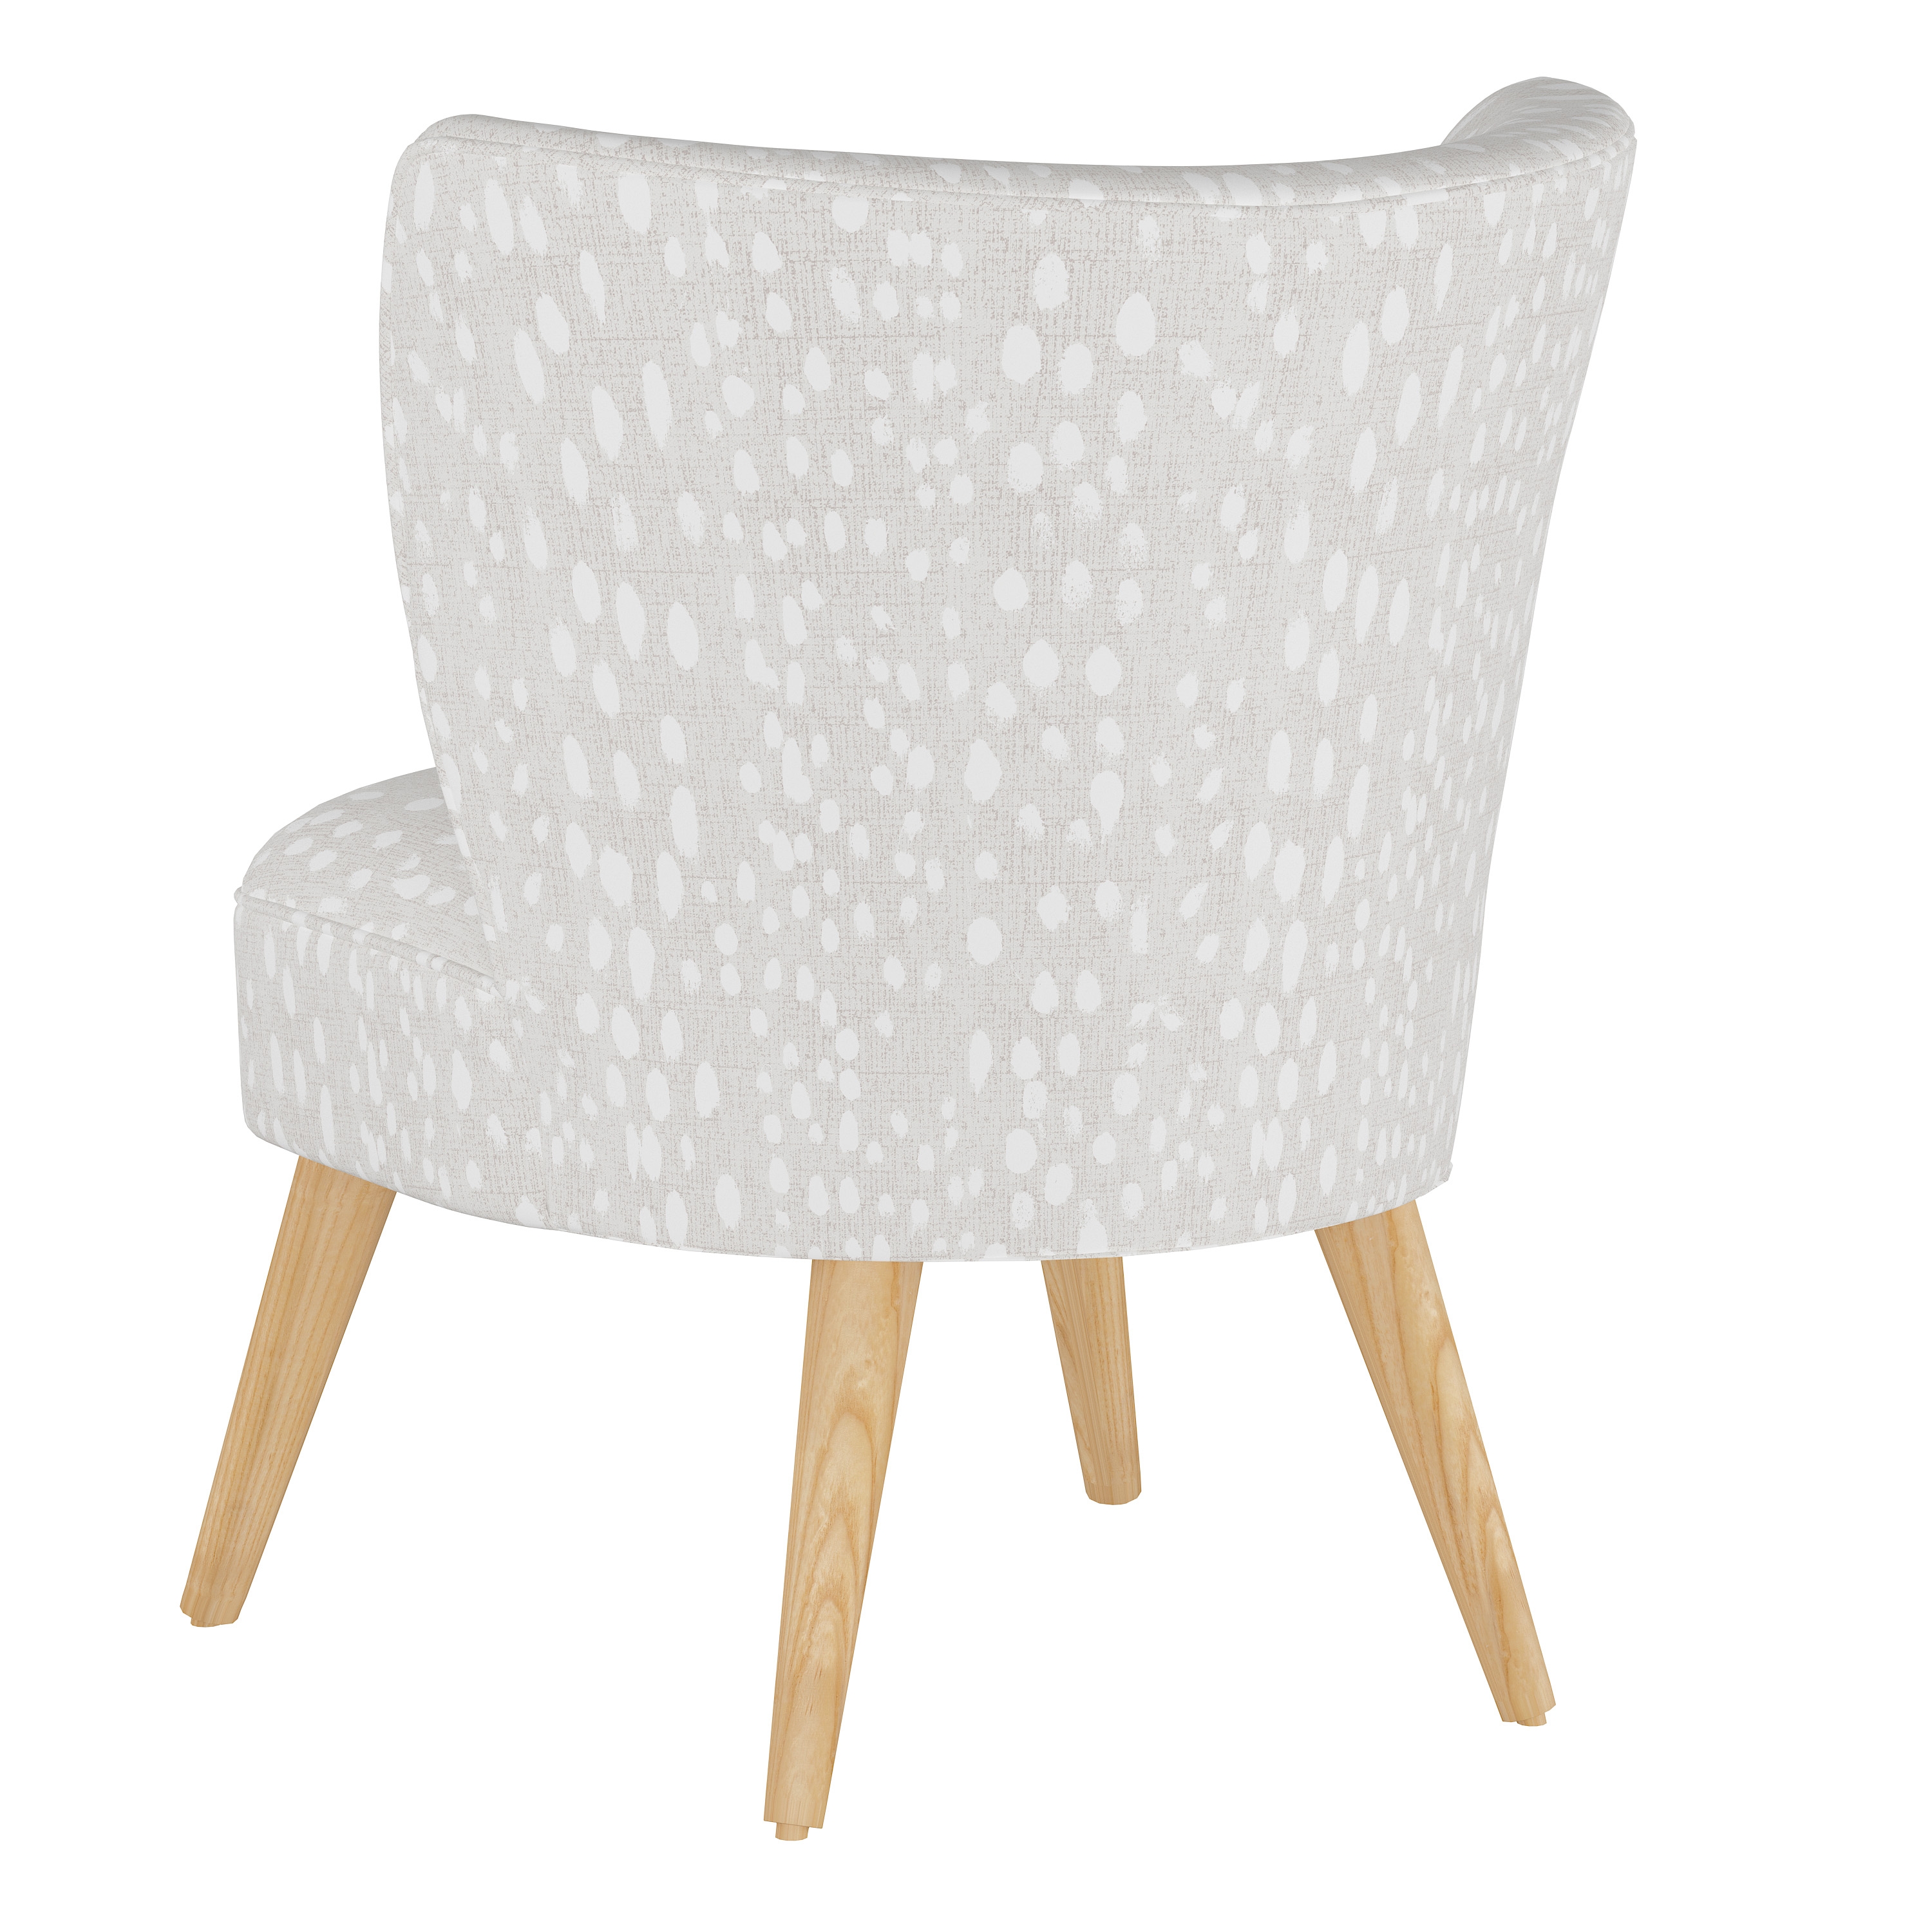 Altgeld Chair - Image 3